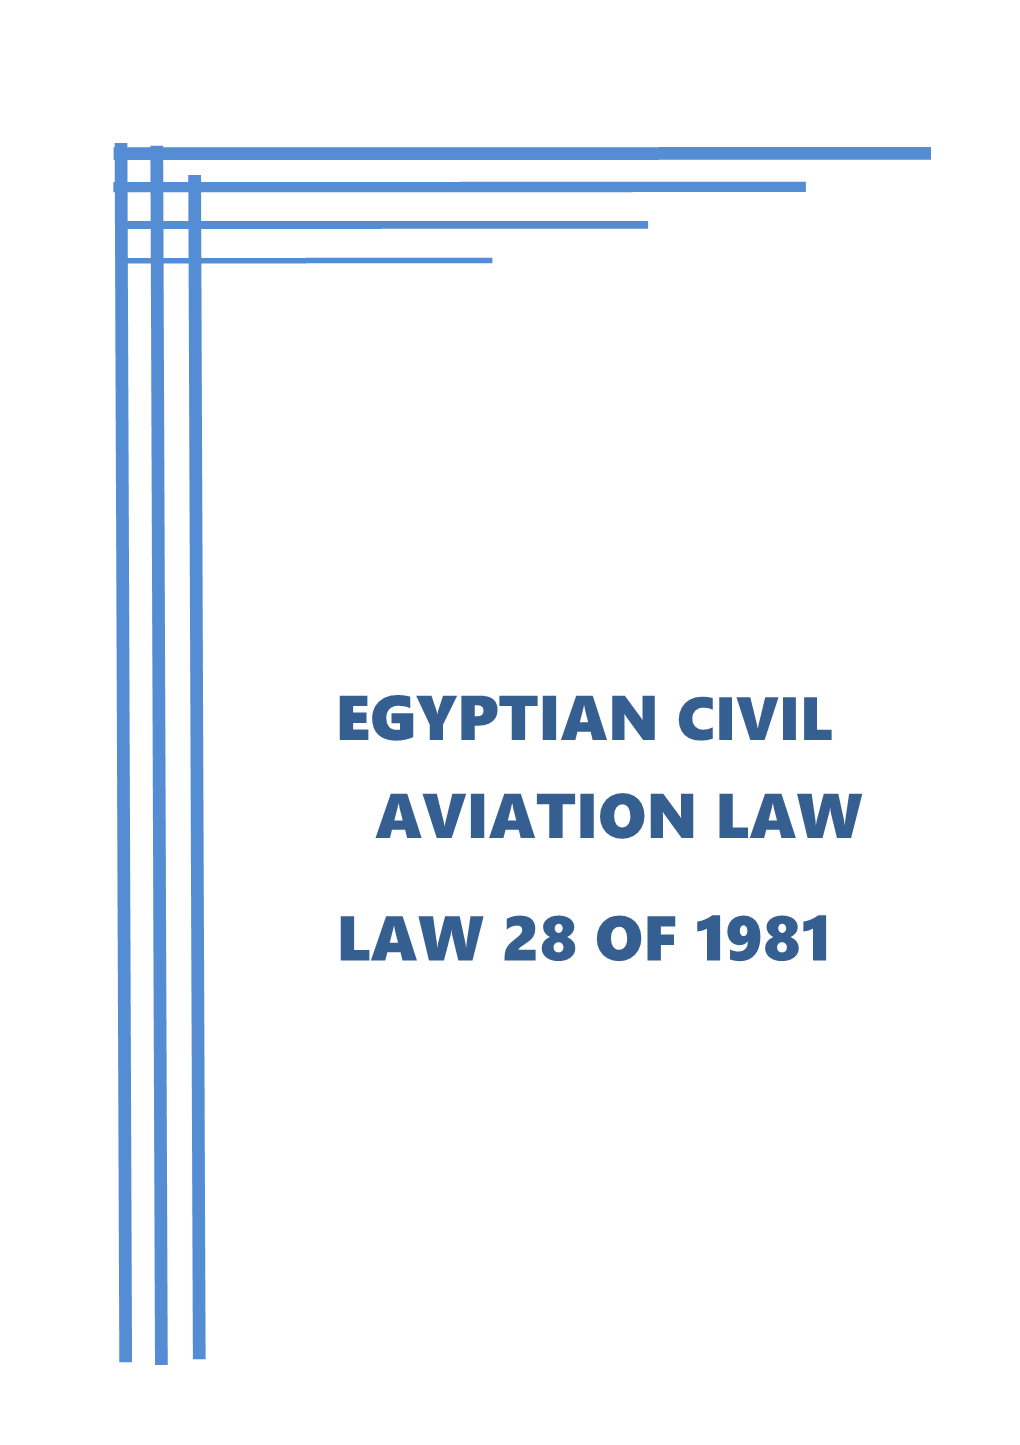 Civil Aviation Law